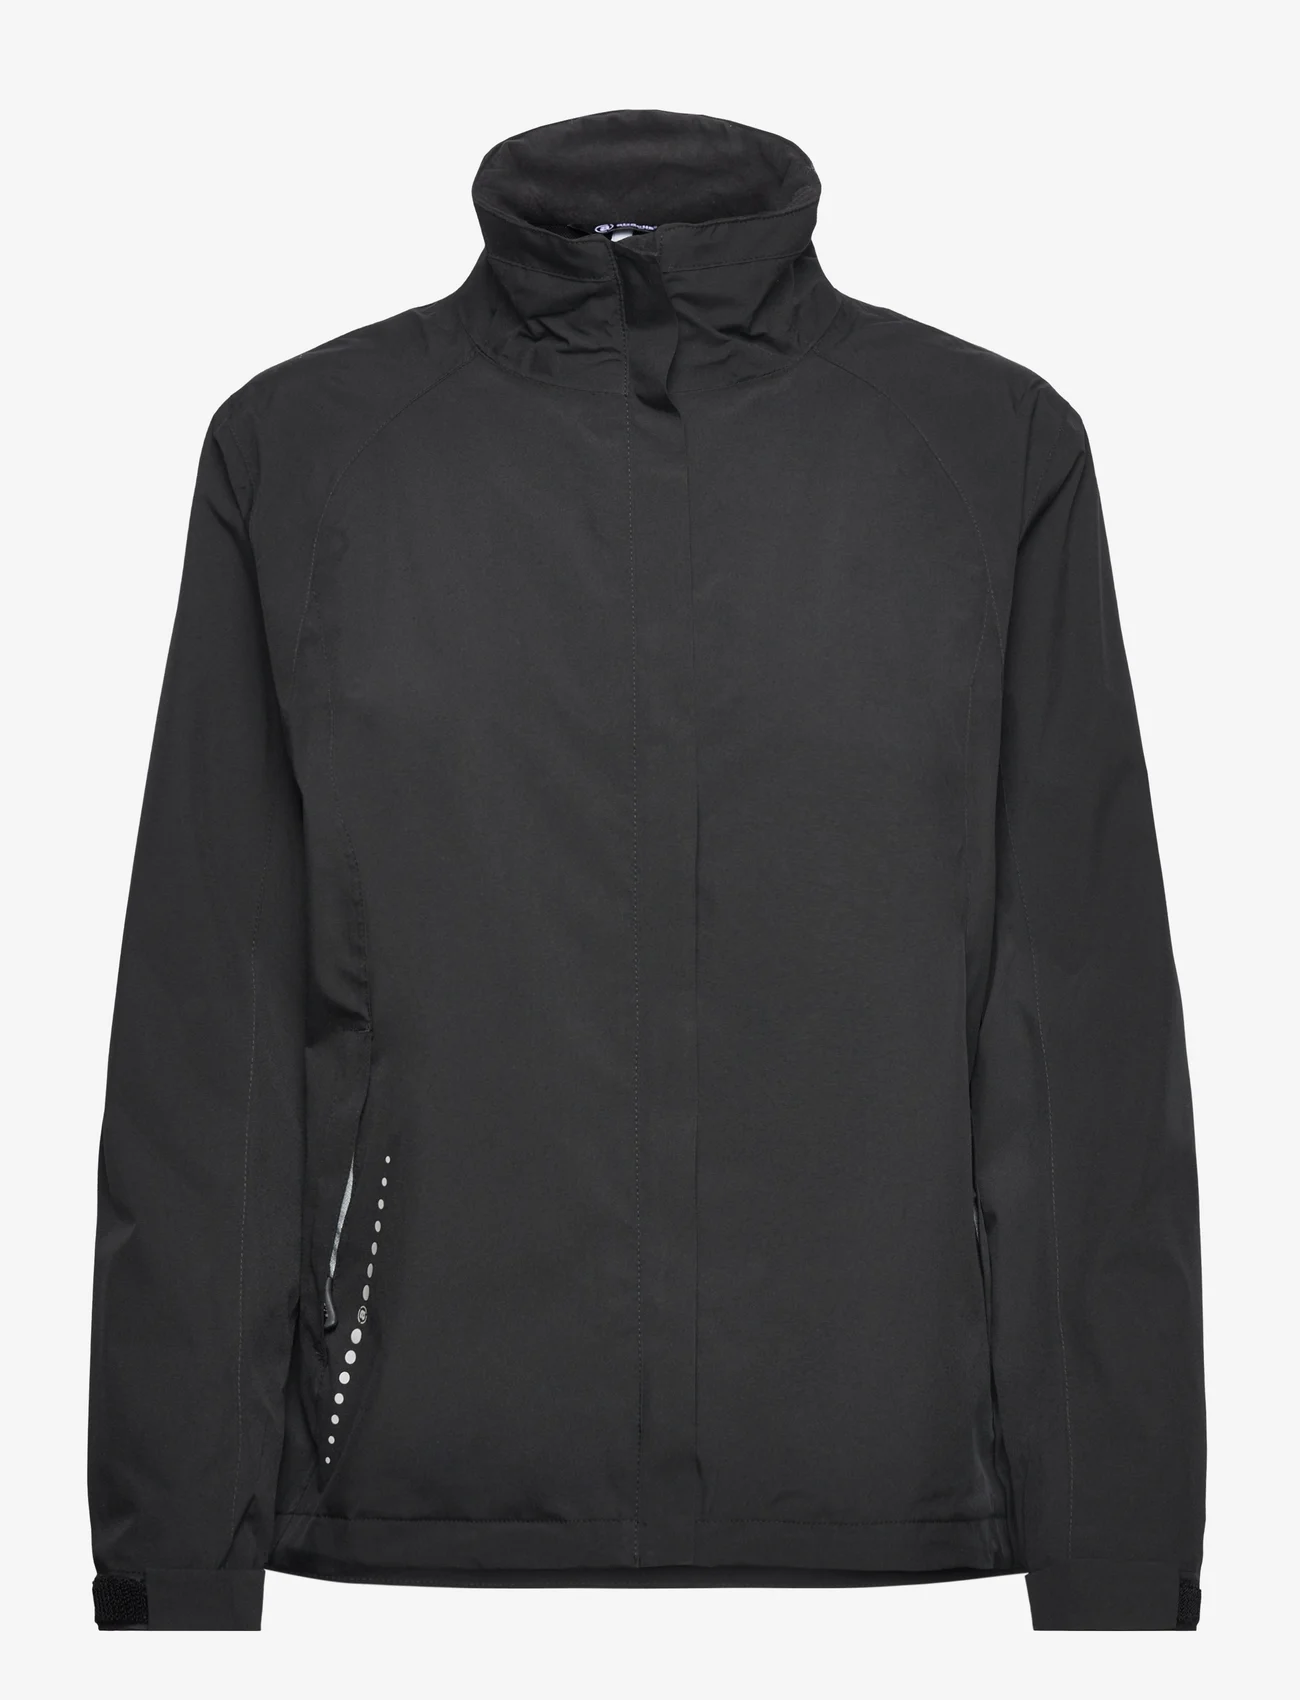 Abacus - Lds Links stretch rainjacket - golf jackets - black - 0